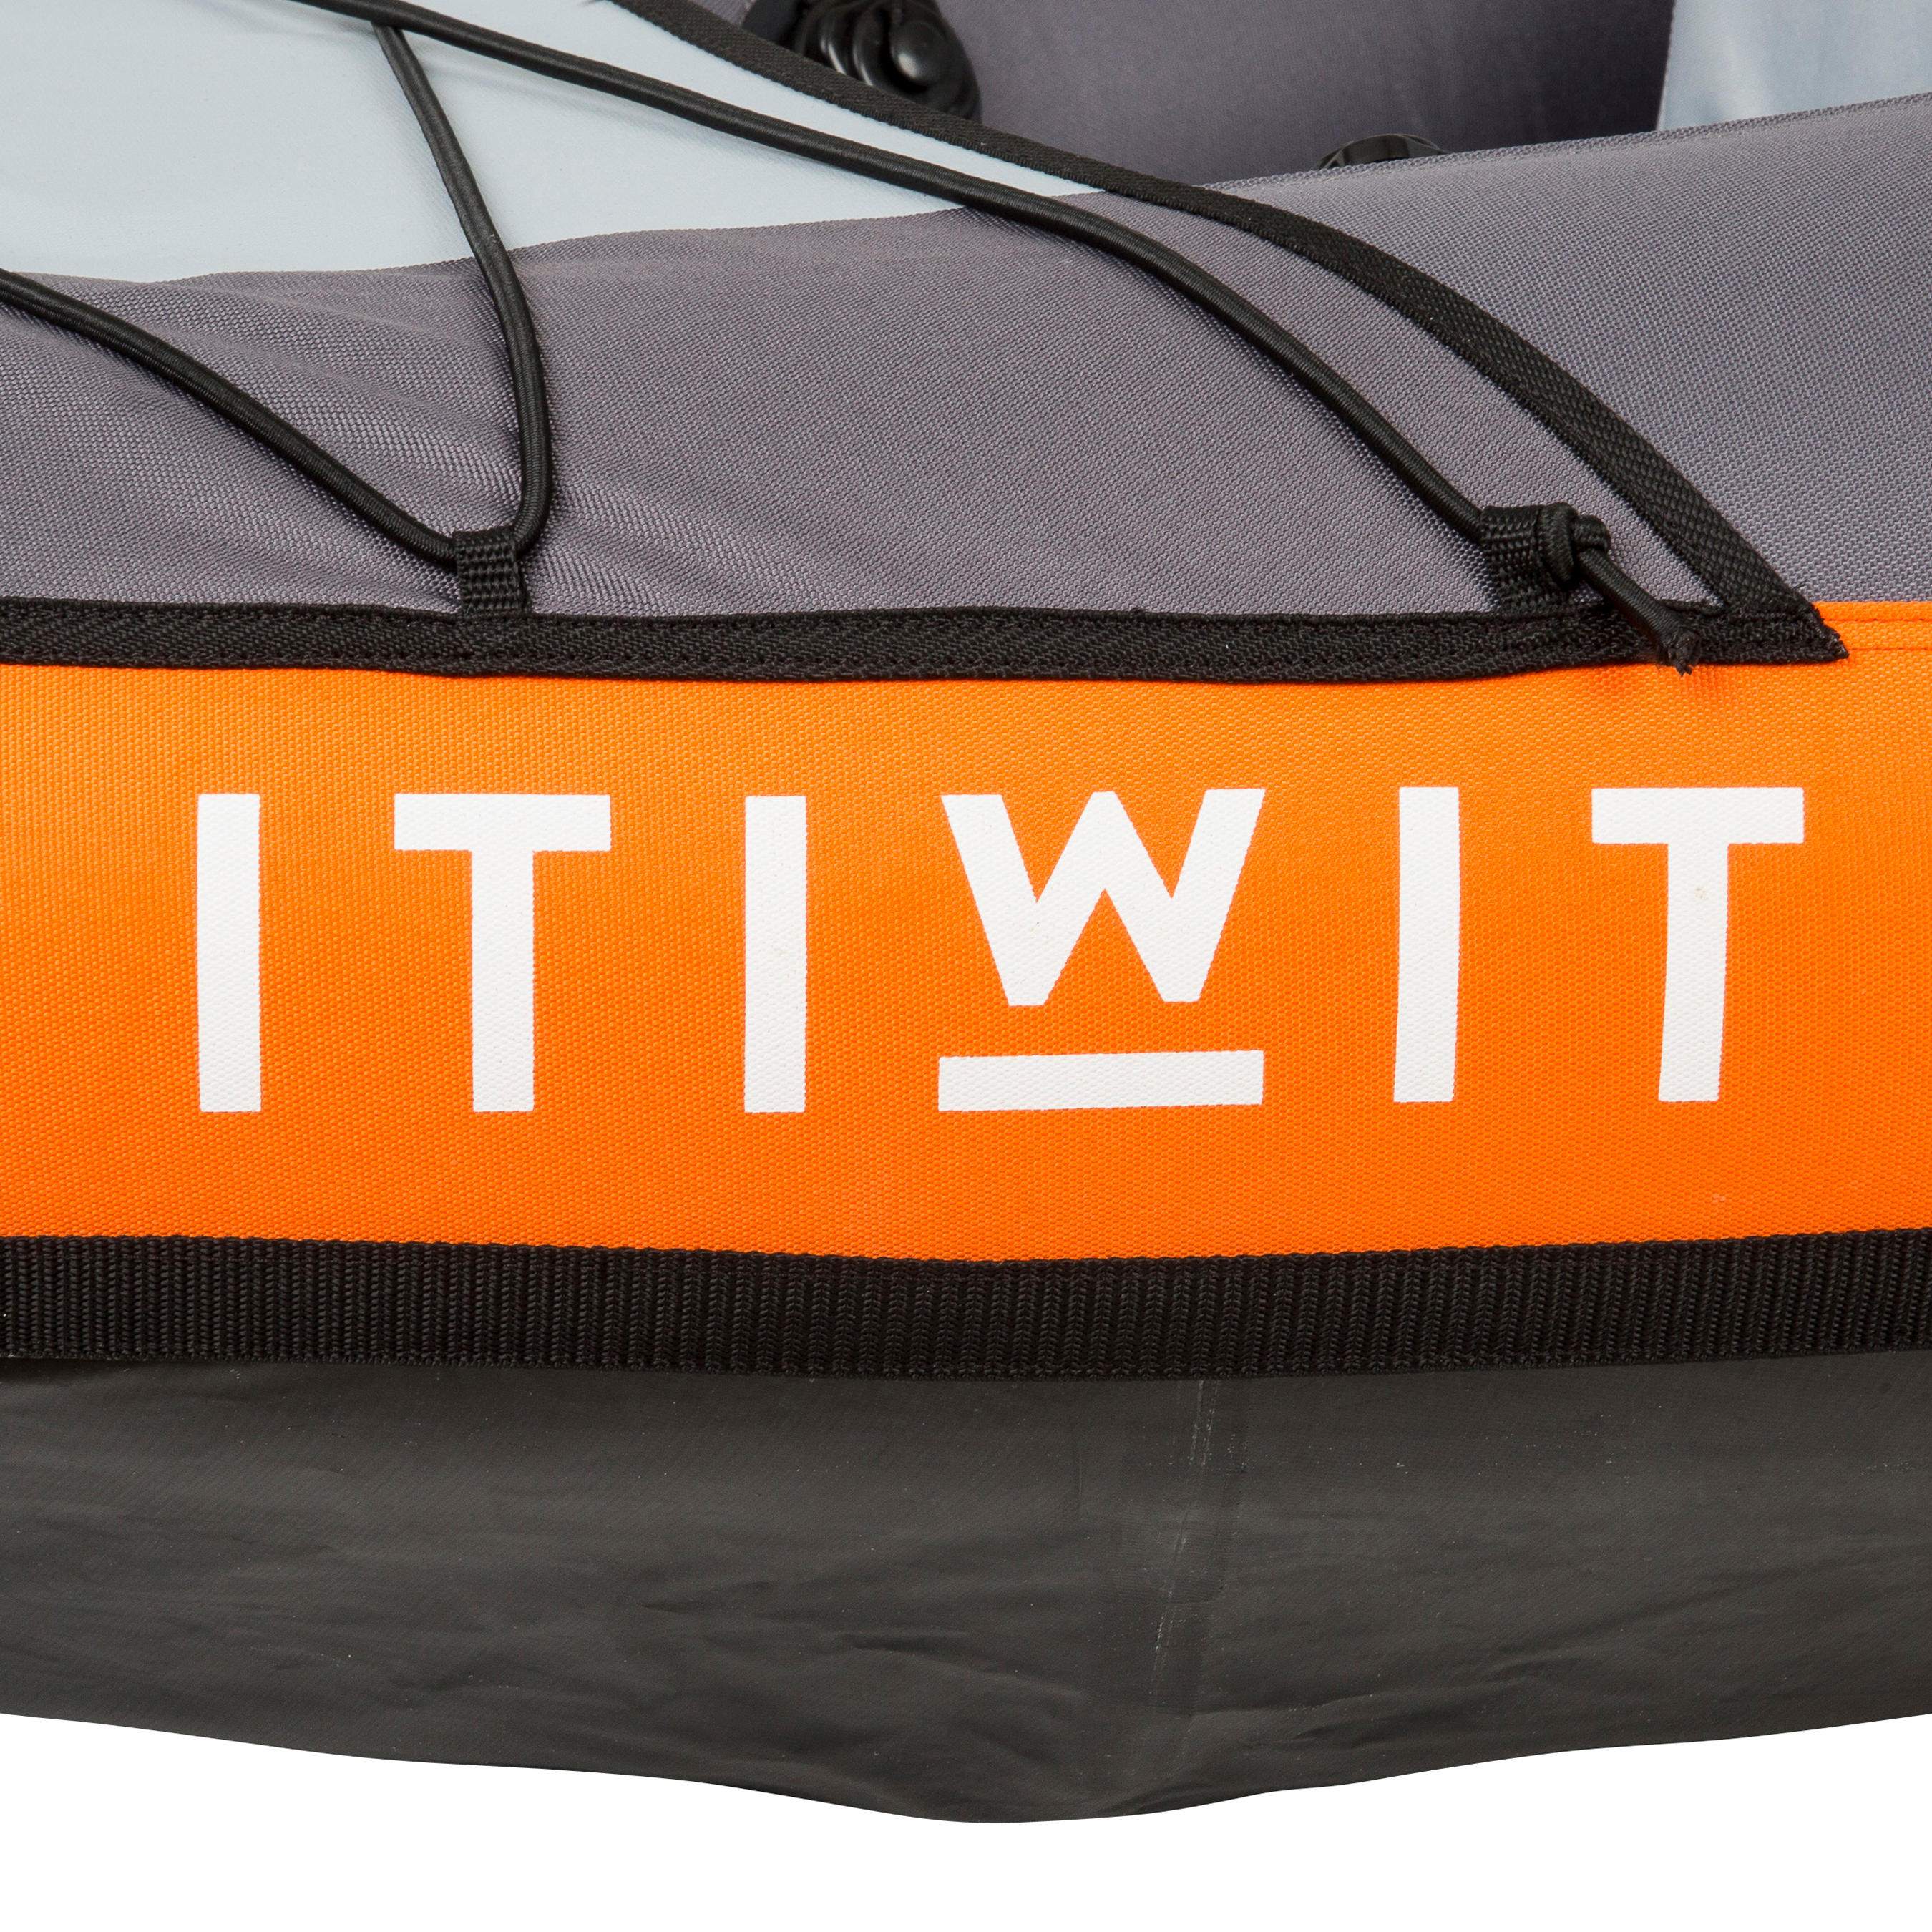 Kayak gonflable 3 personnes - KTI 100 orange/noir - ITIWIT